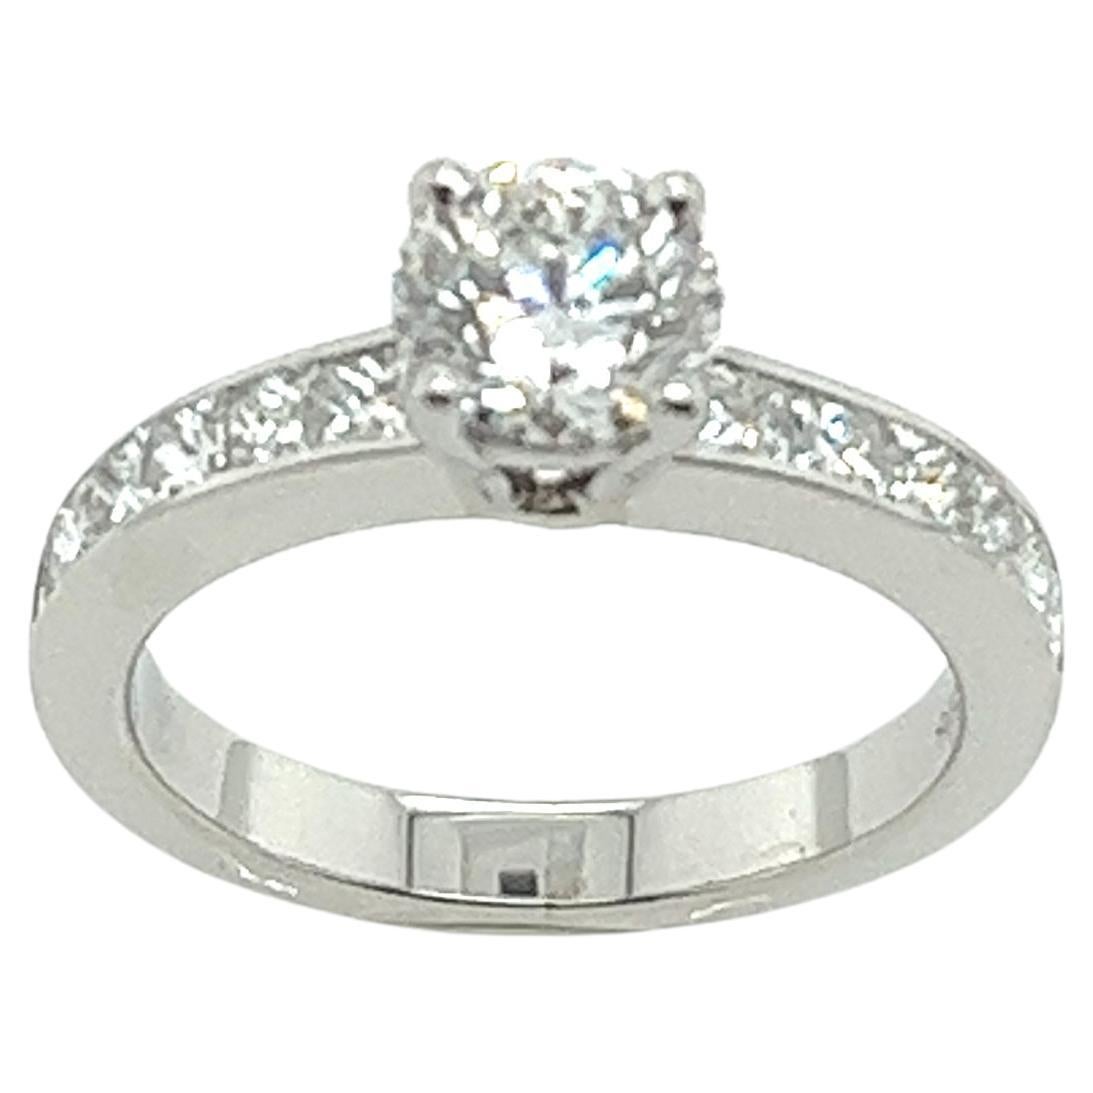 Platinum solitaire Diamond Ring 0.70ct E Colour, with 12 diamonds on shoulders